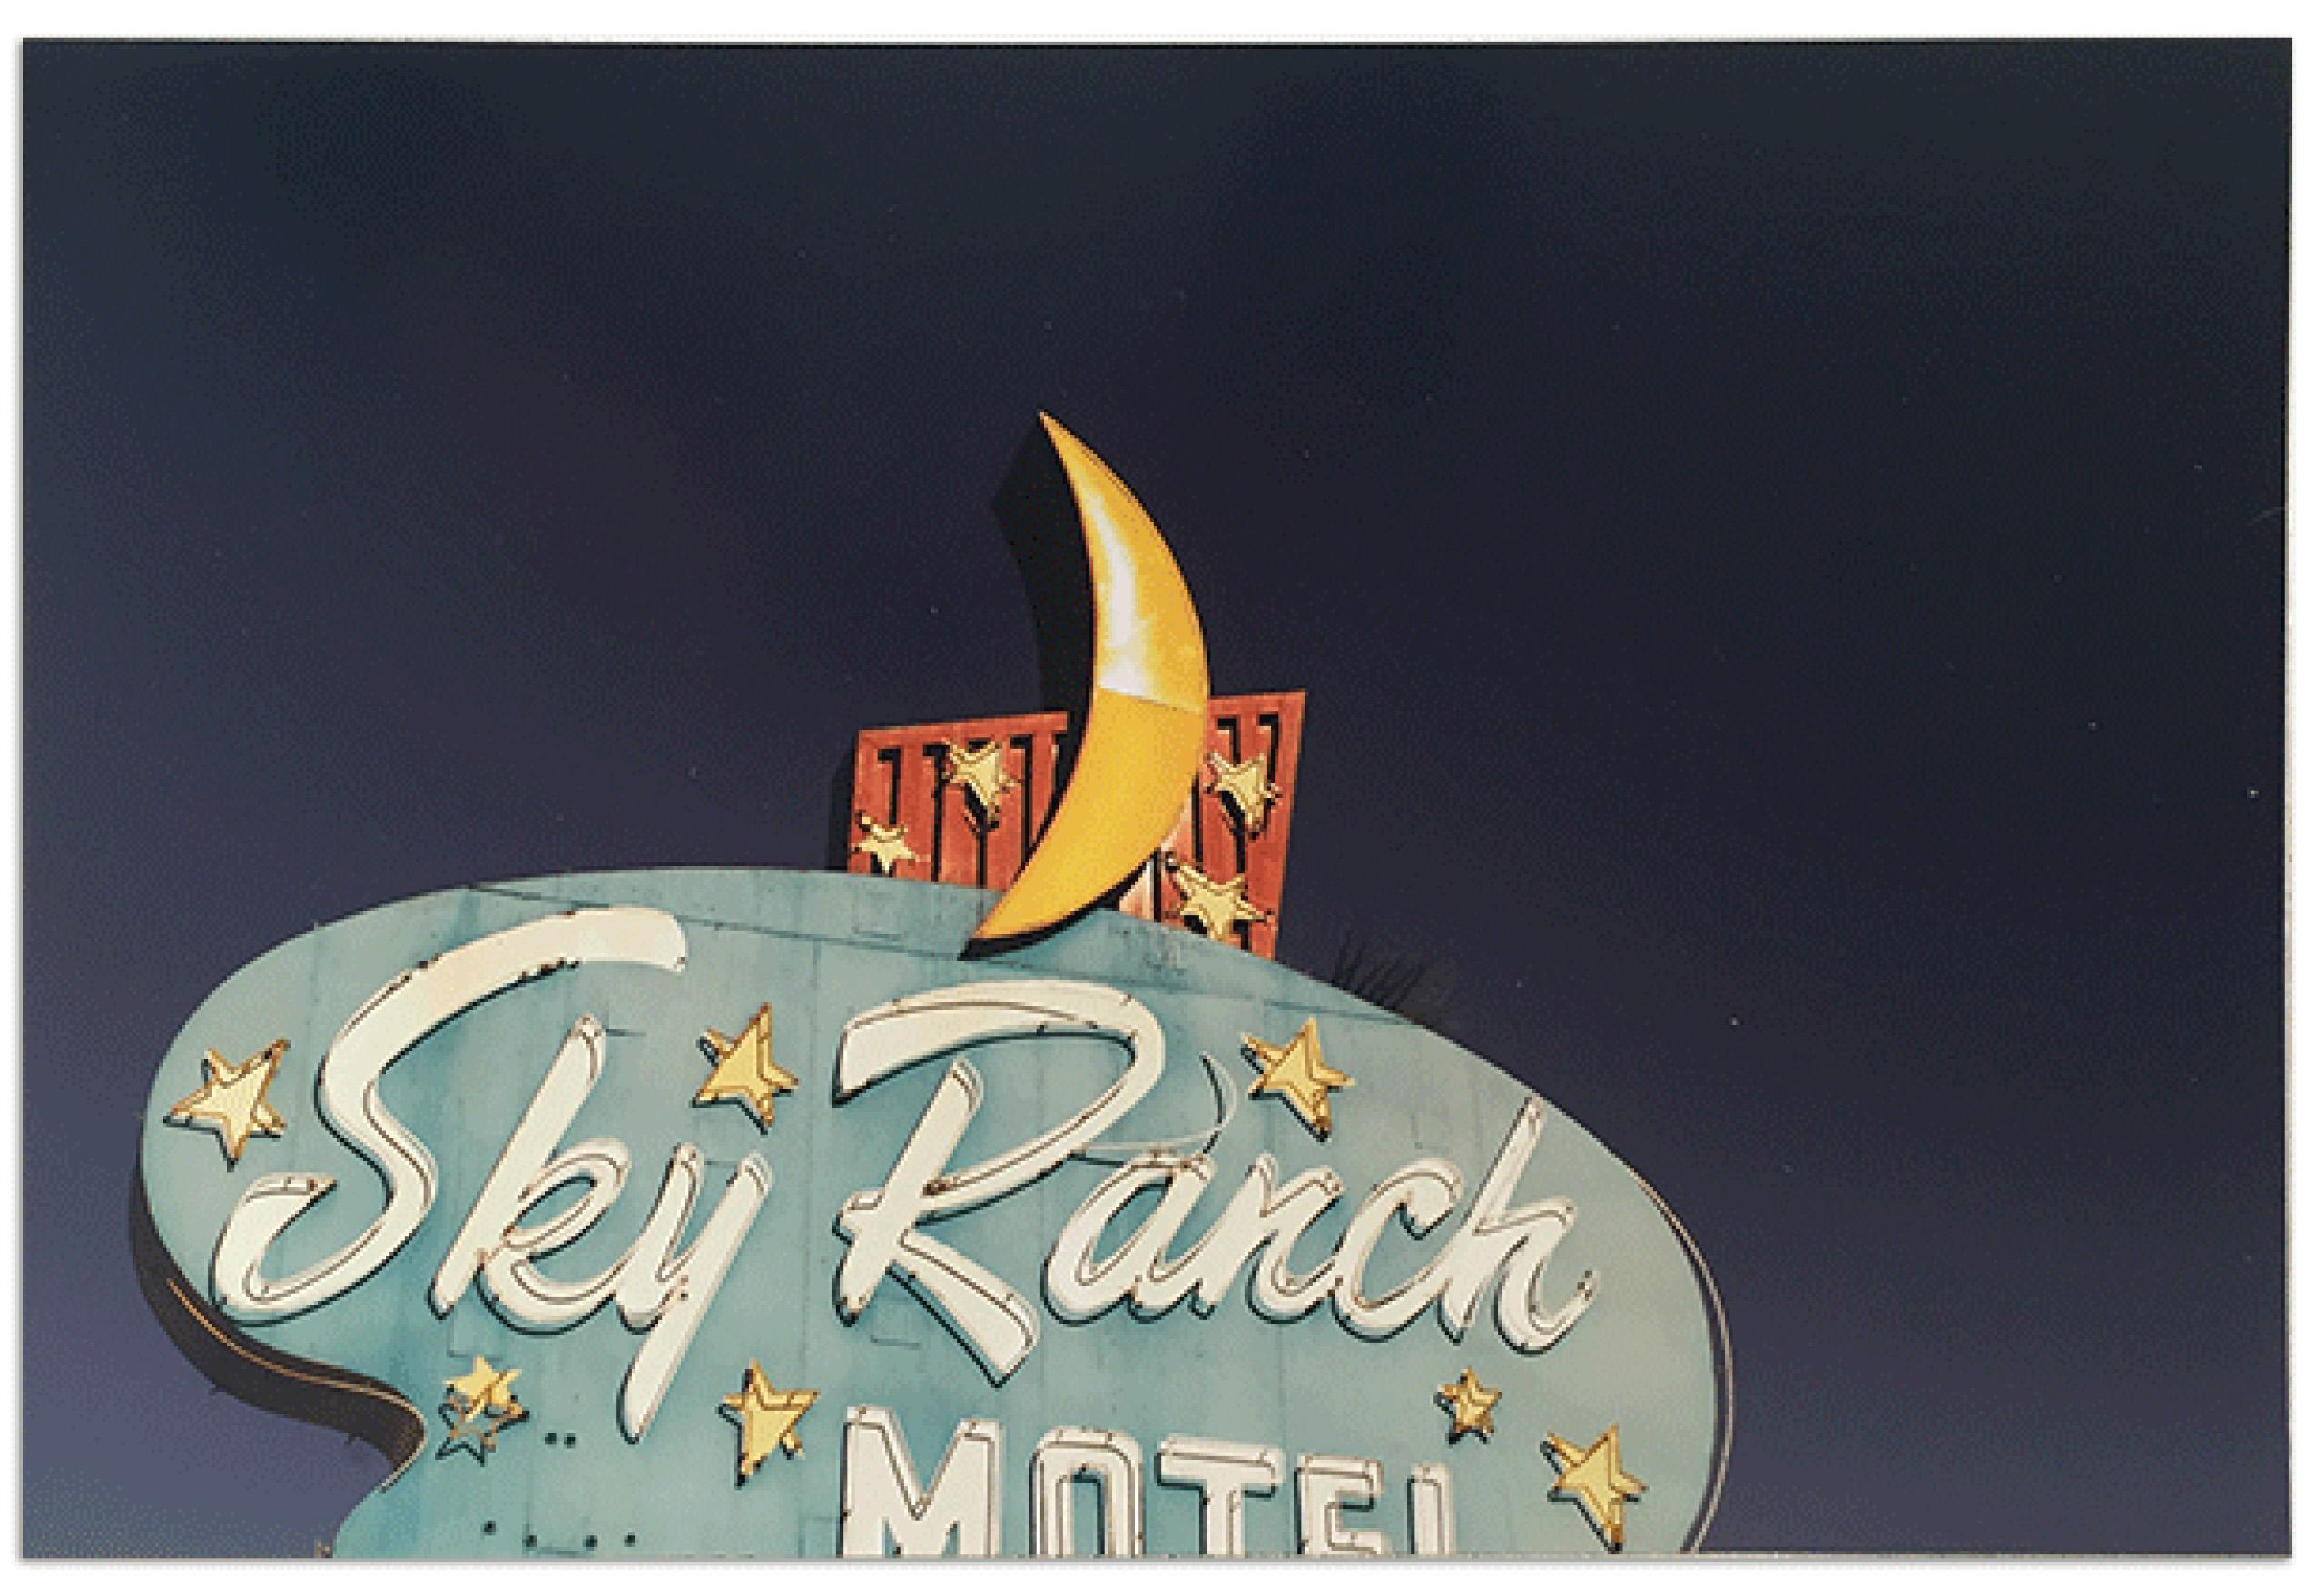 "Sky Ranch Motel"  Type C Metallic Print  - Photograph by Jen Zahigian